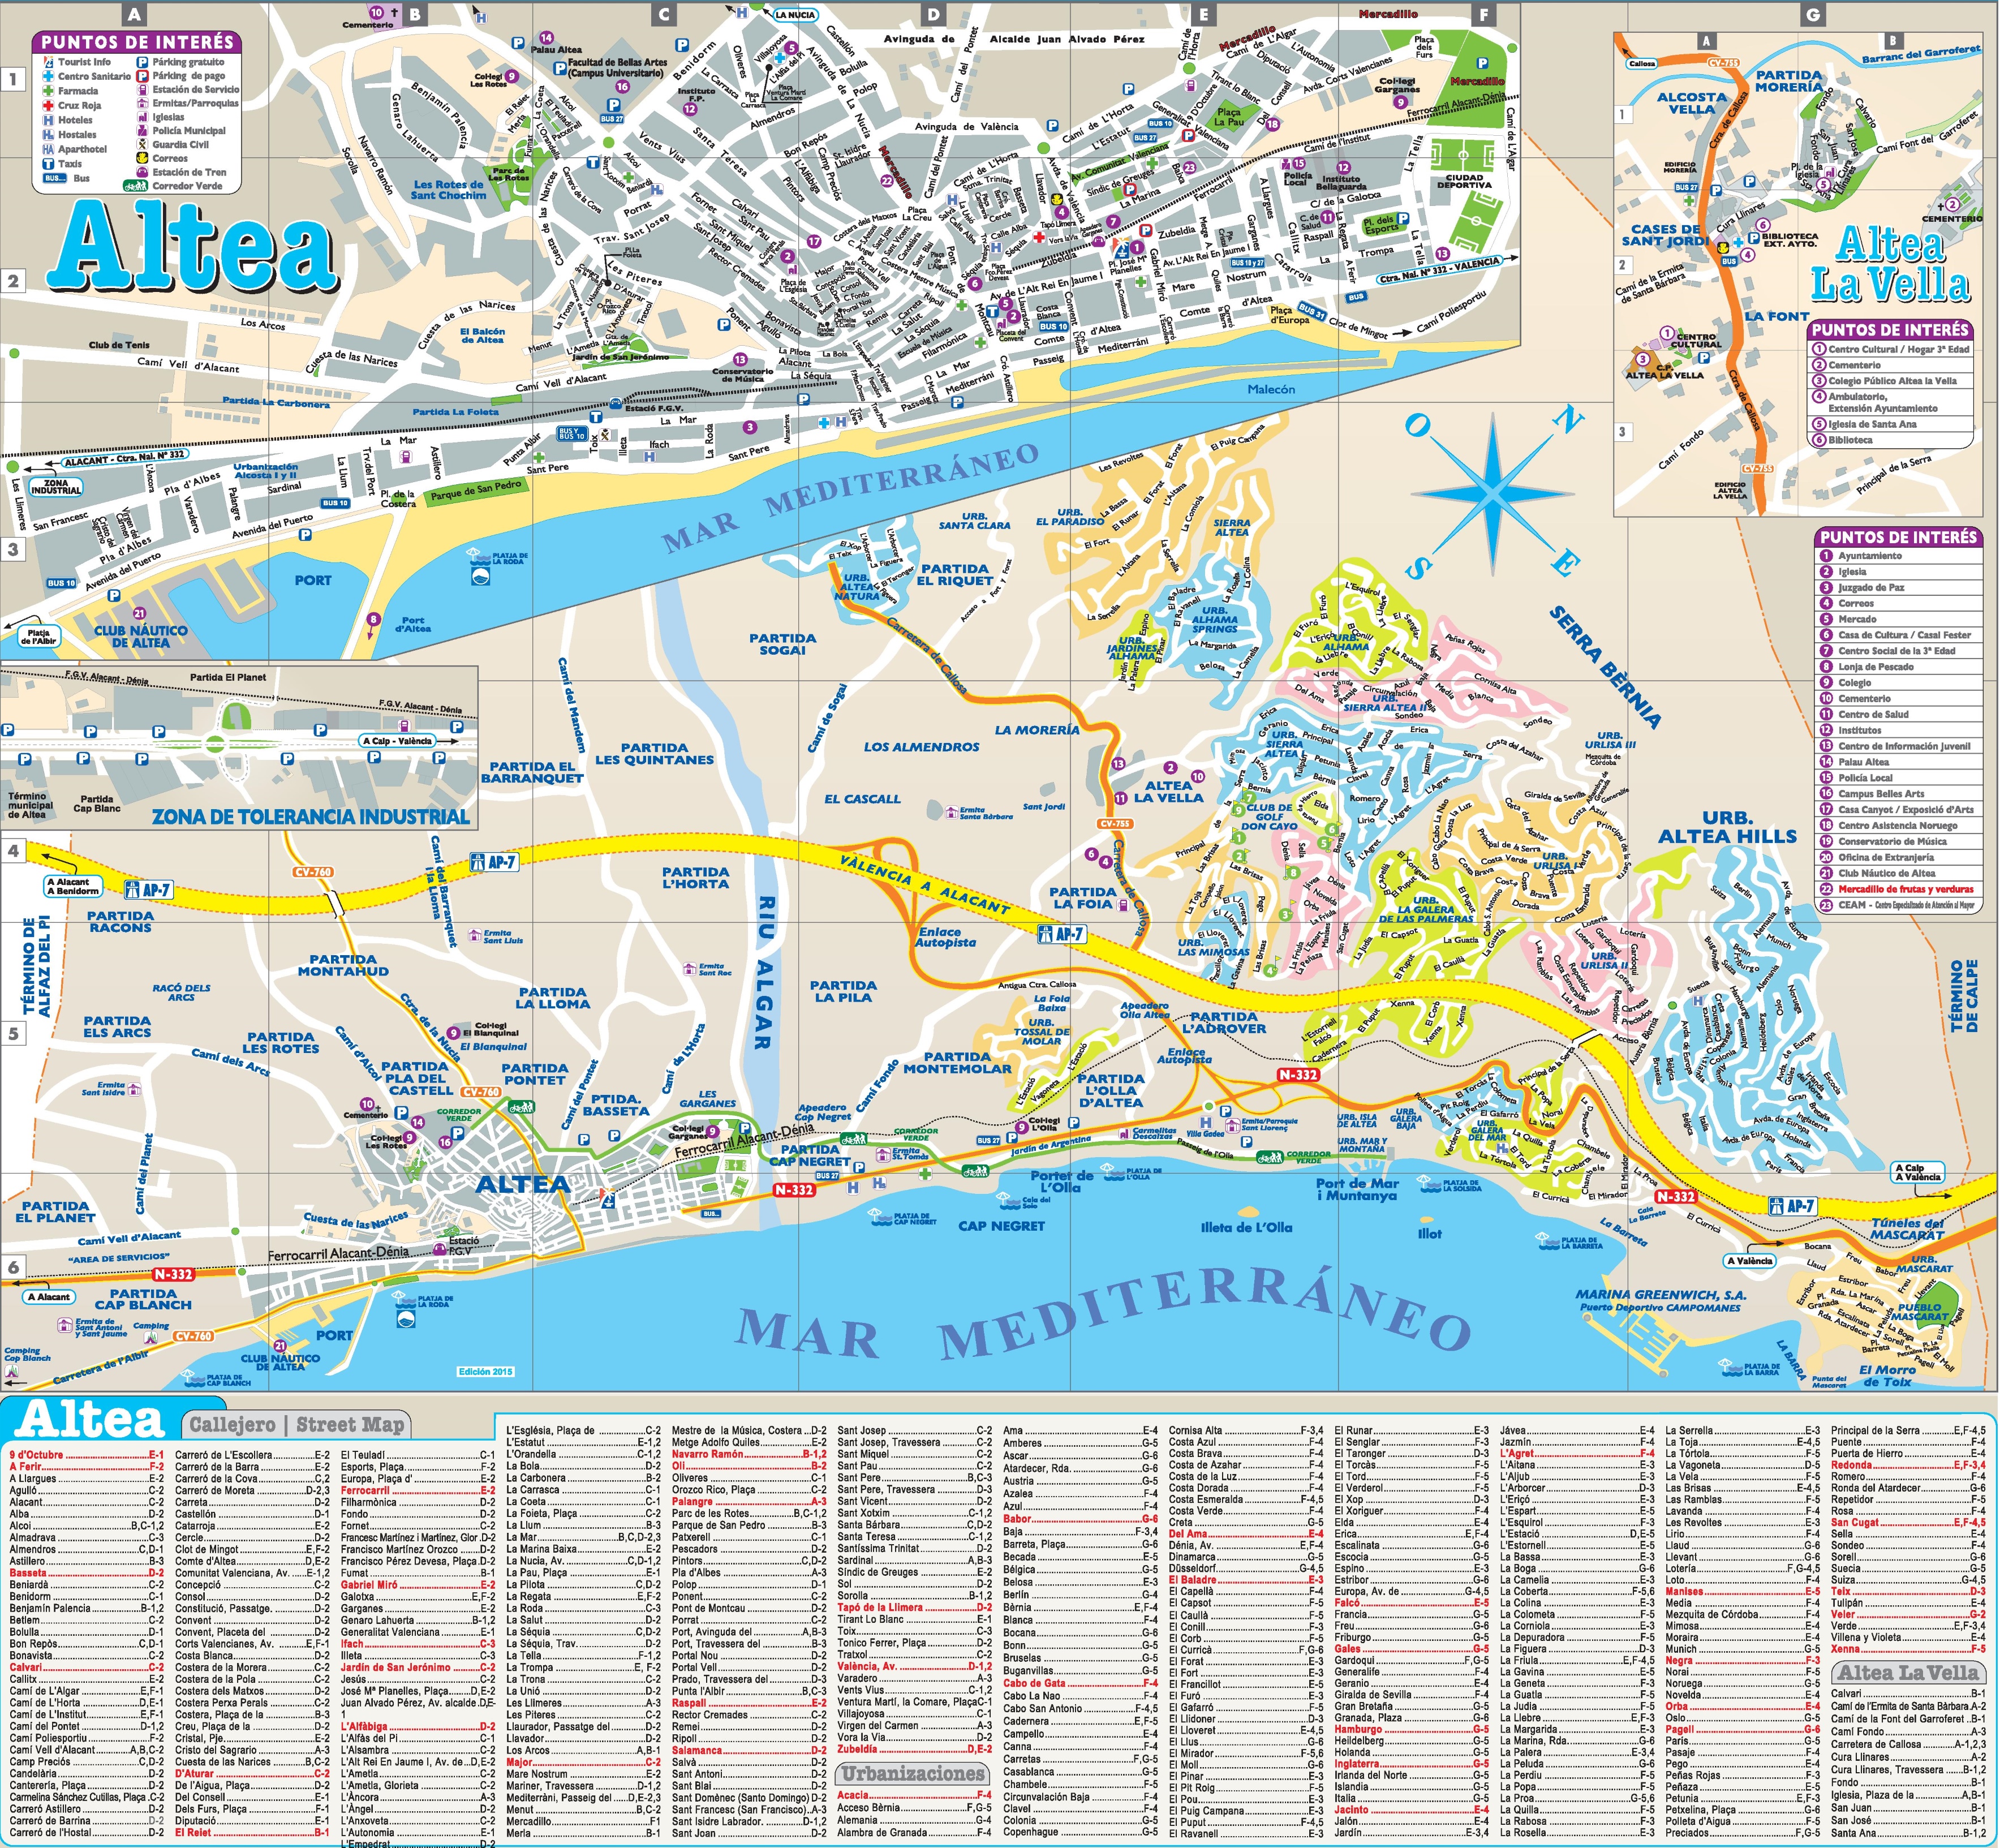 Altea tourist map3535 x 3266